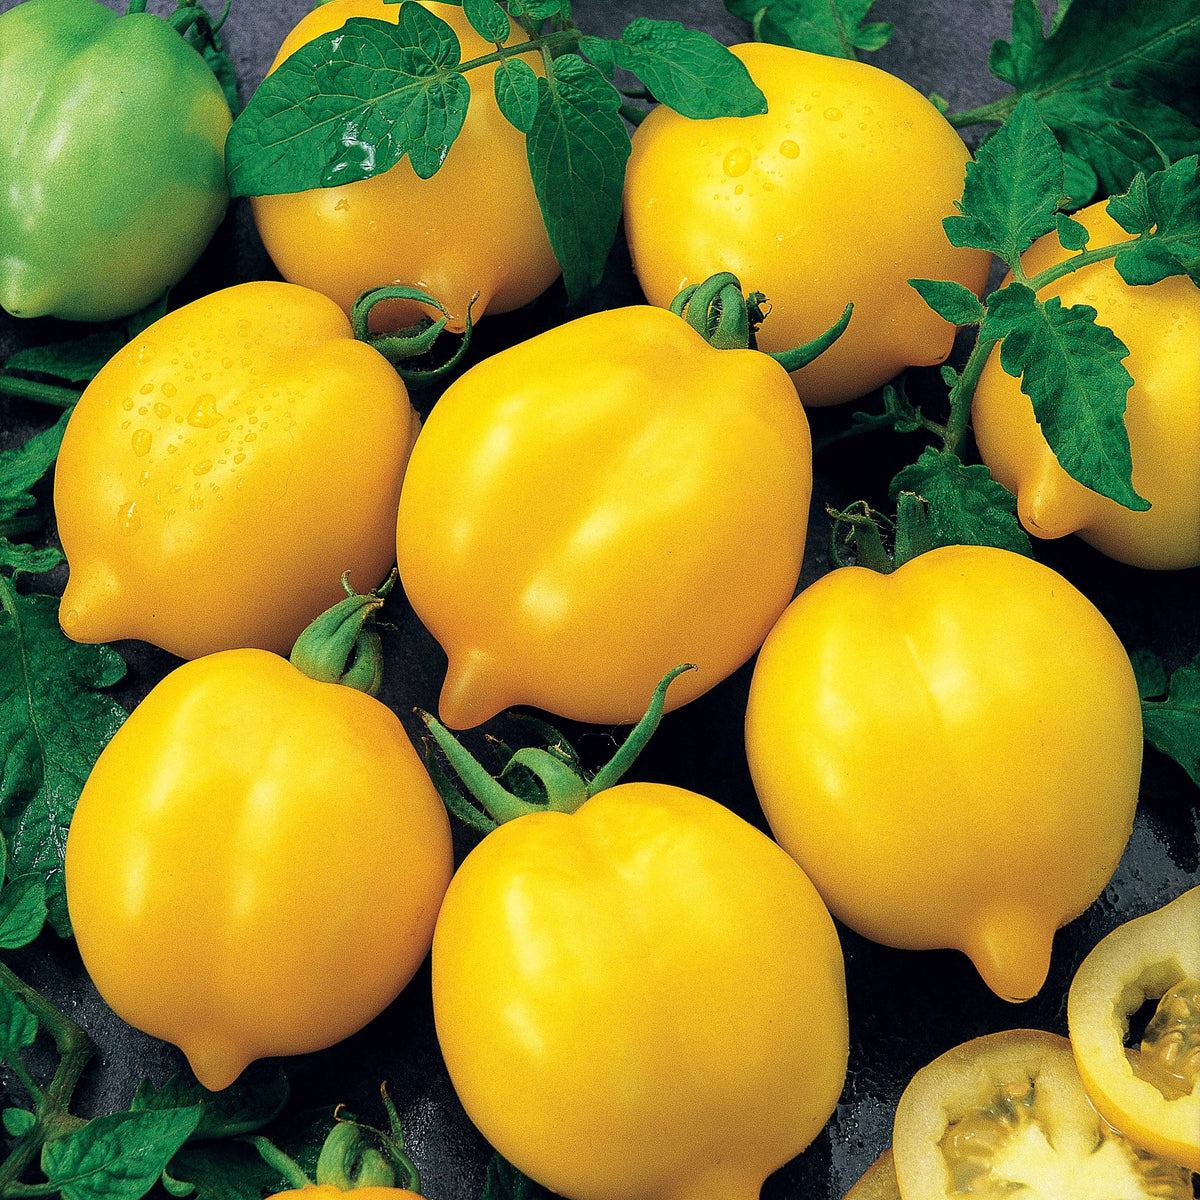 Tomate citron - Lemon Tree - Solanum lycopersicum lemon tree - Potager